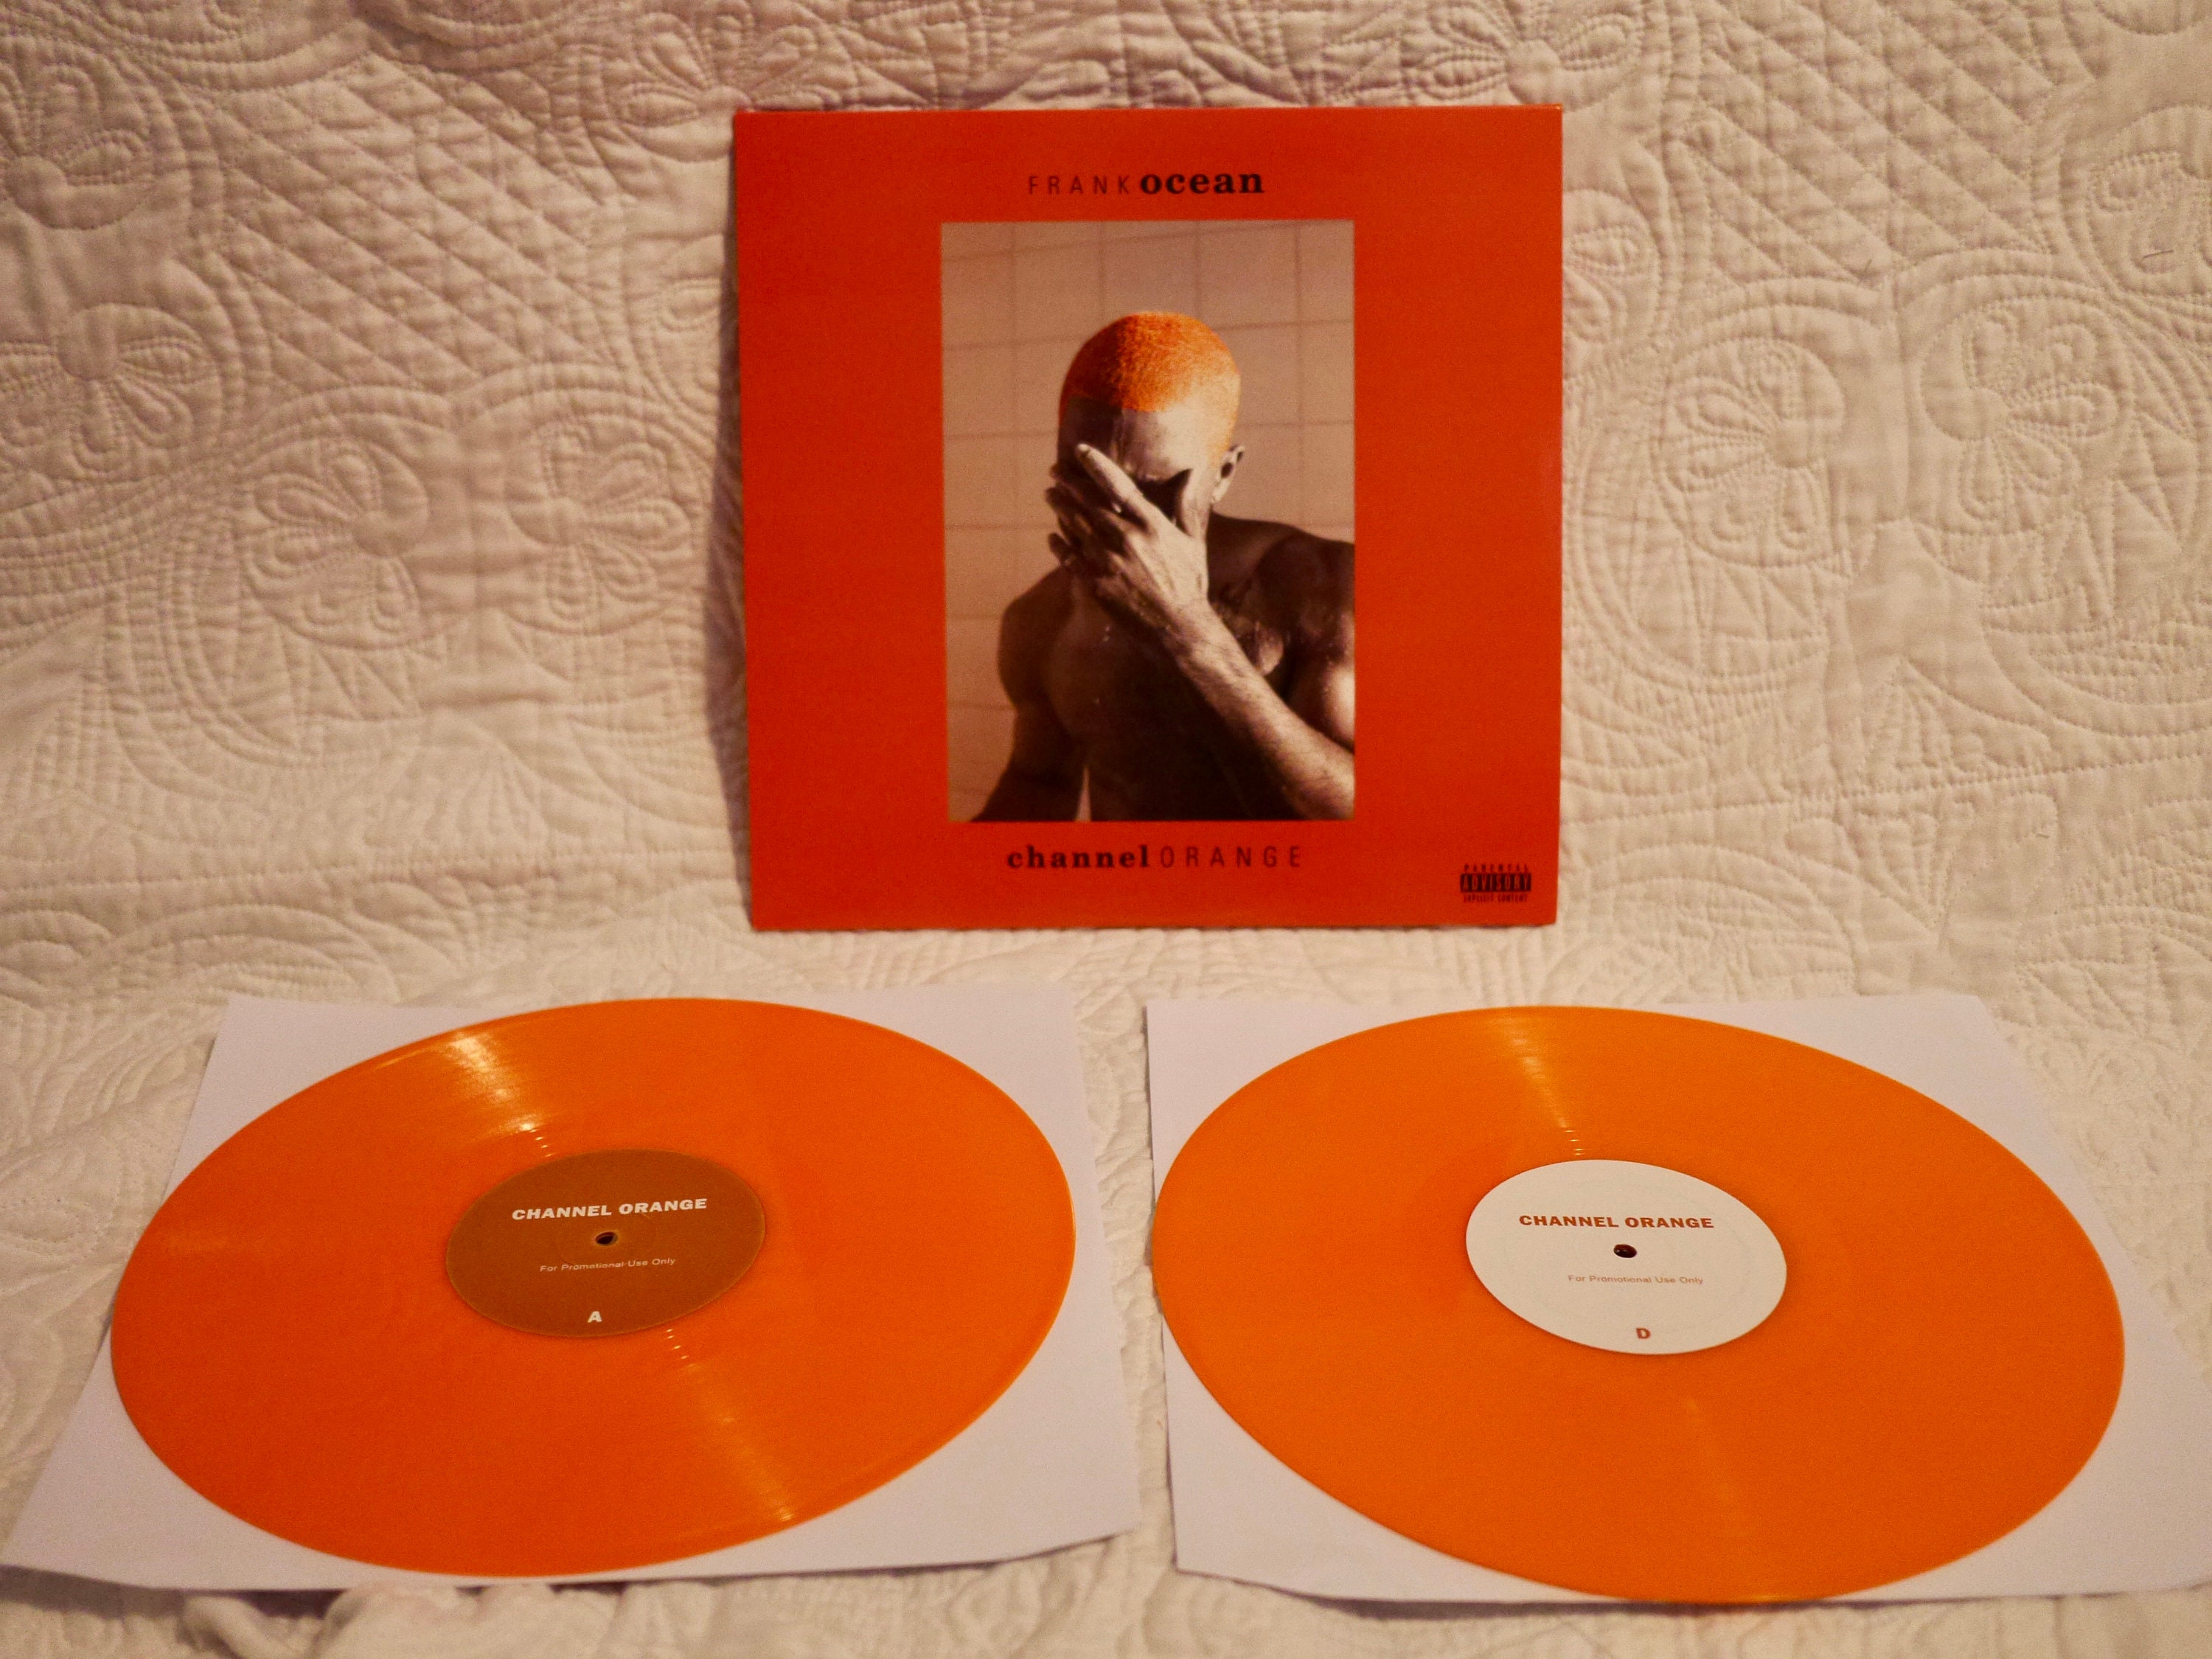 Tuning into Channel Orange – Frank Ocean (Album Review) – Black Roses